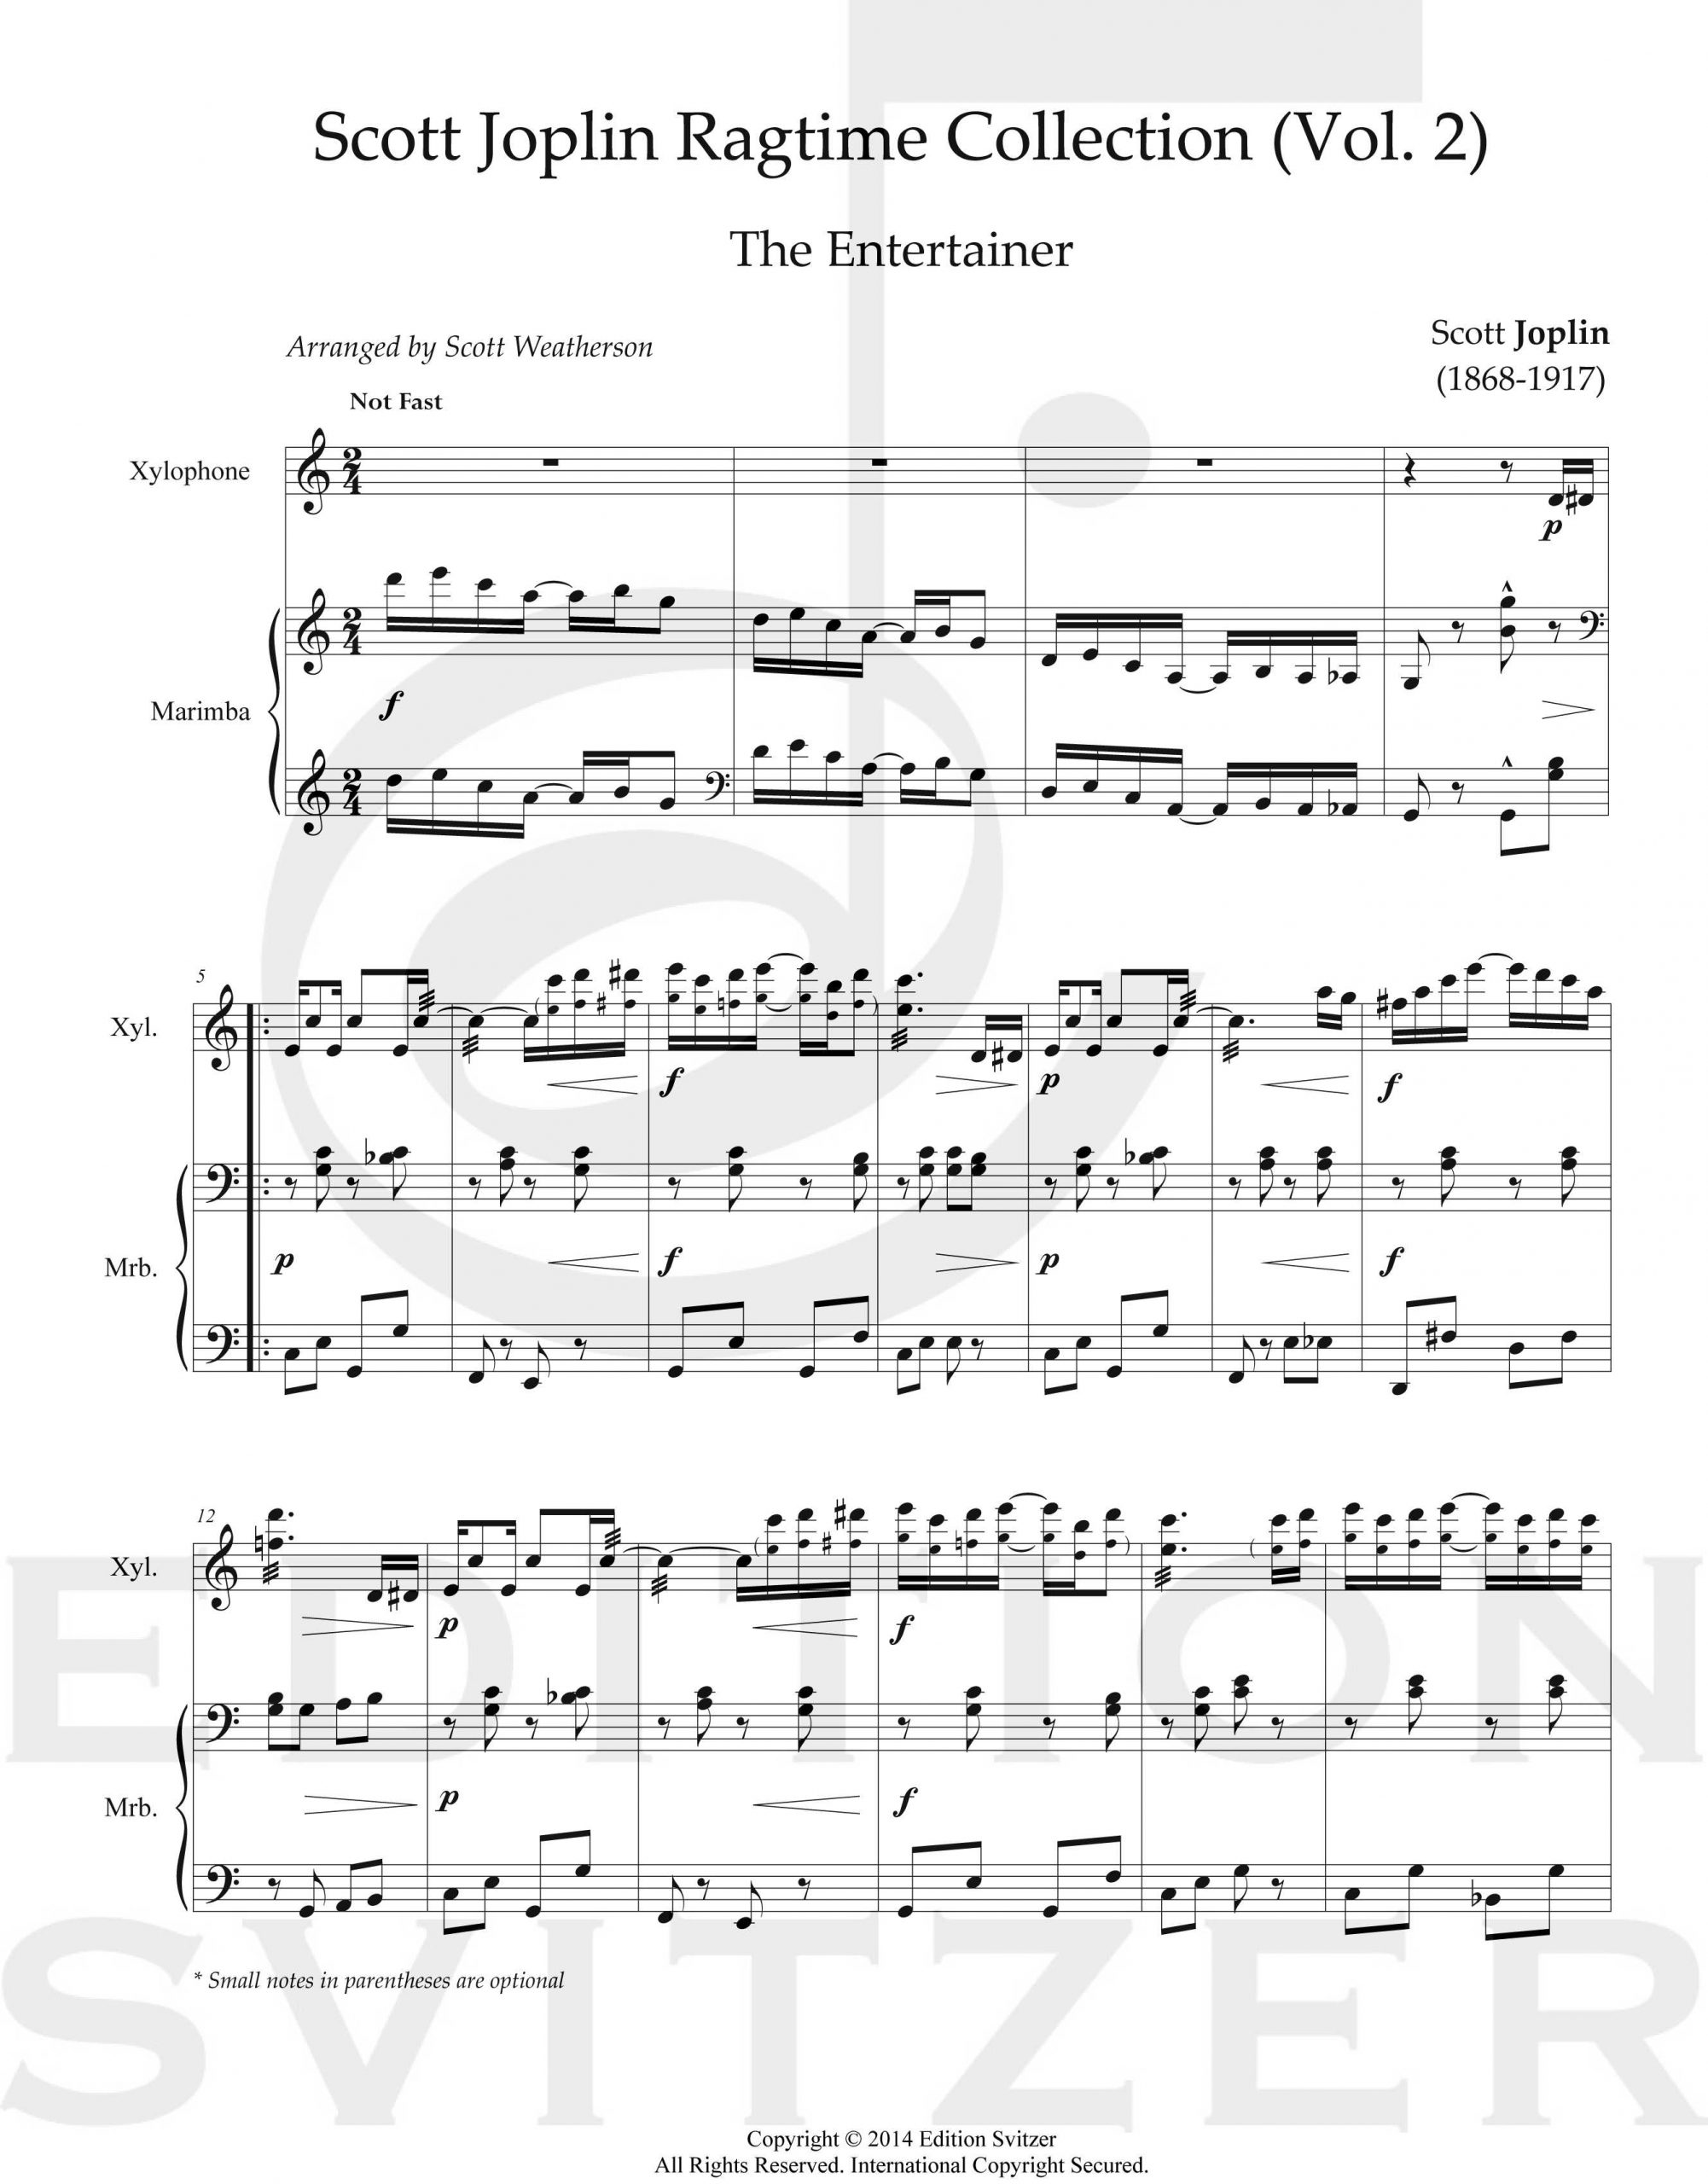 Ragtime Collection (Vol. 2) by Joplin arr. Scott Weatherson